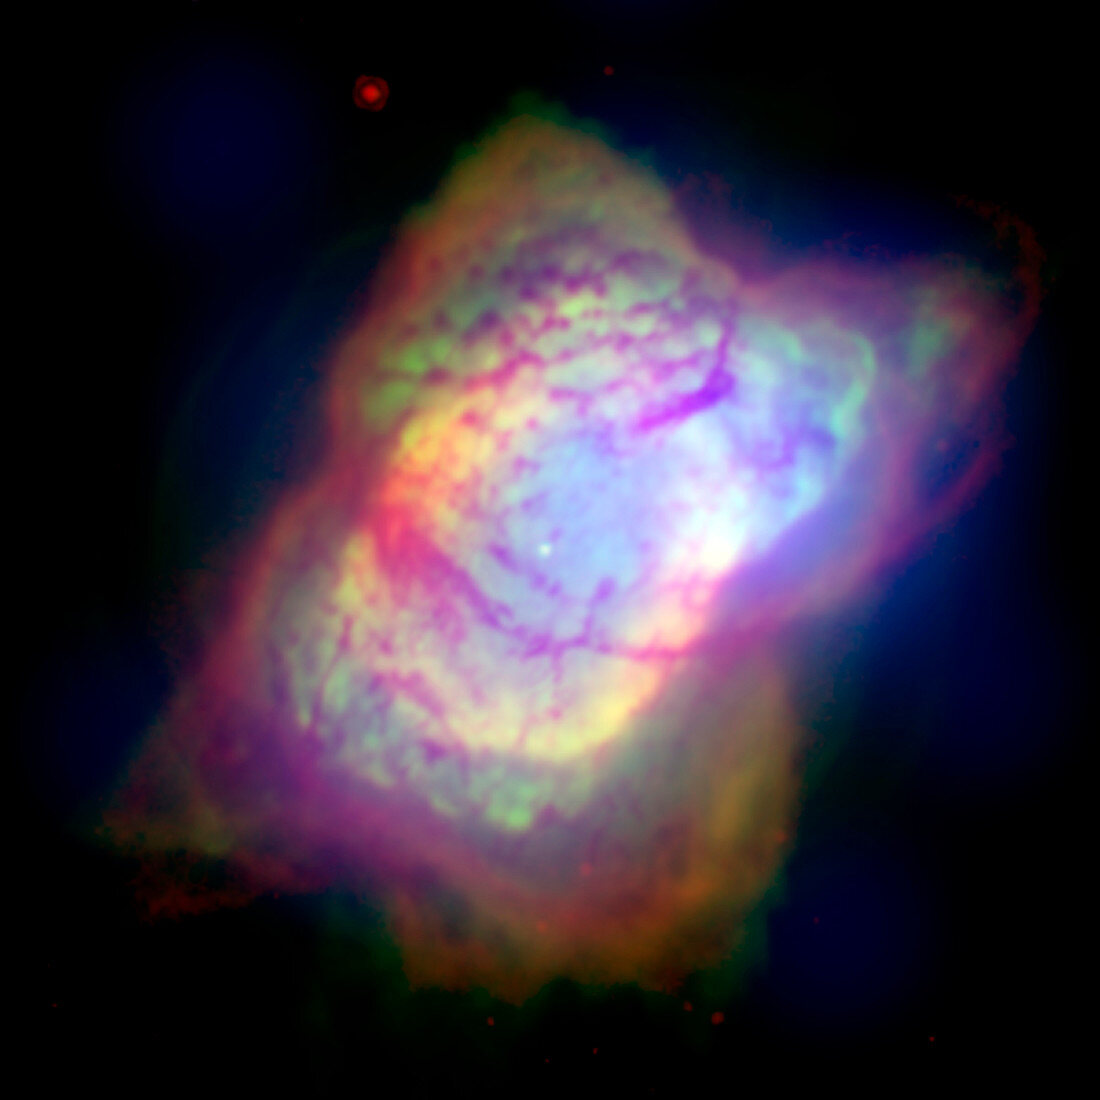 Planetary nebula,X-ray composite